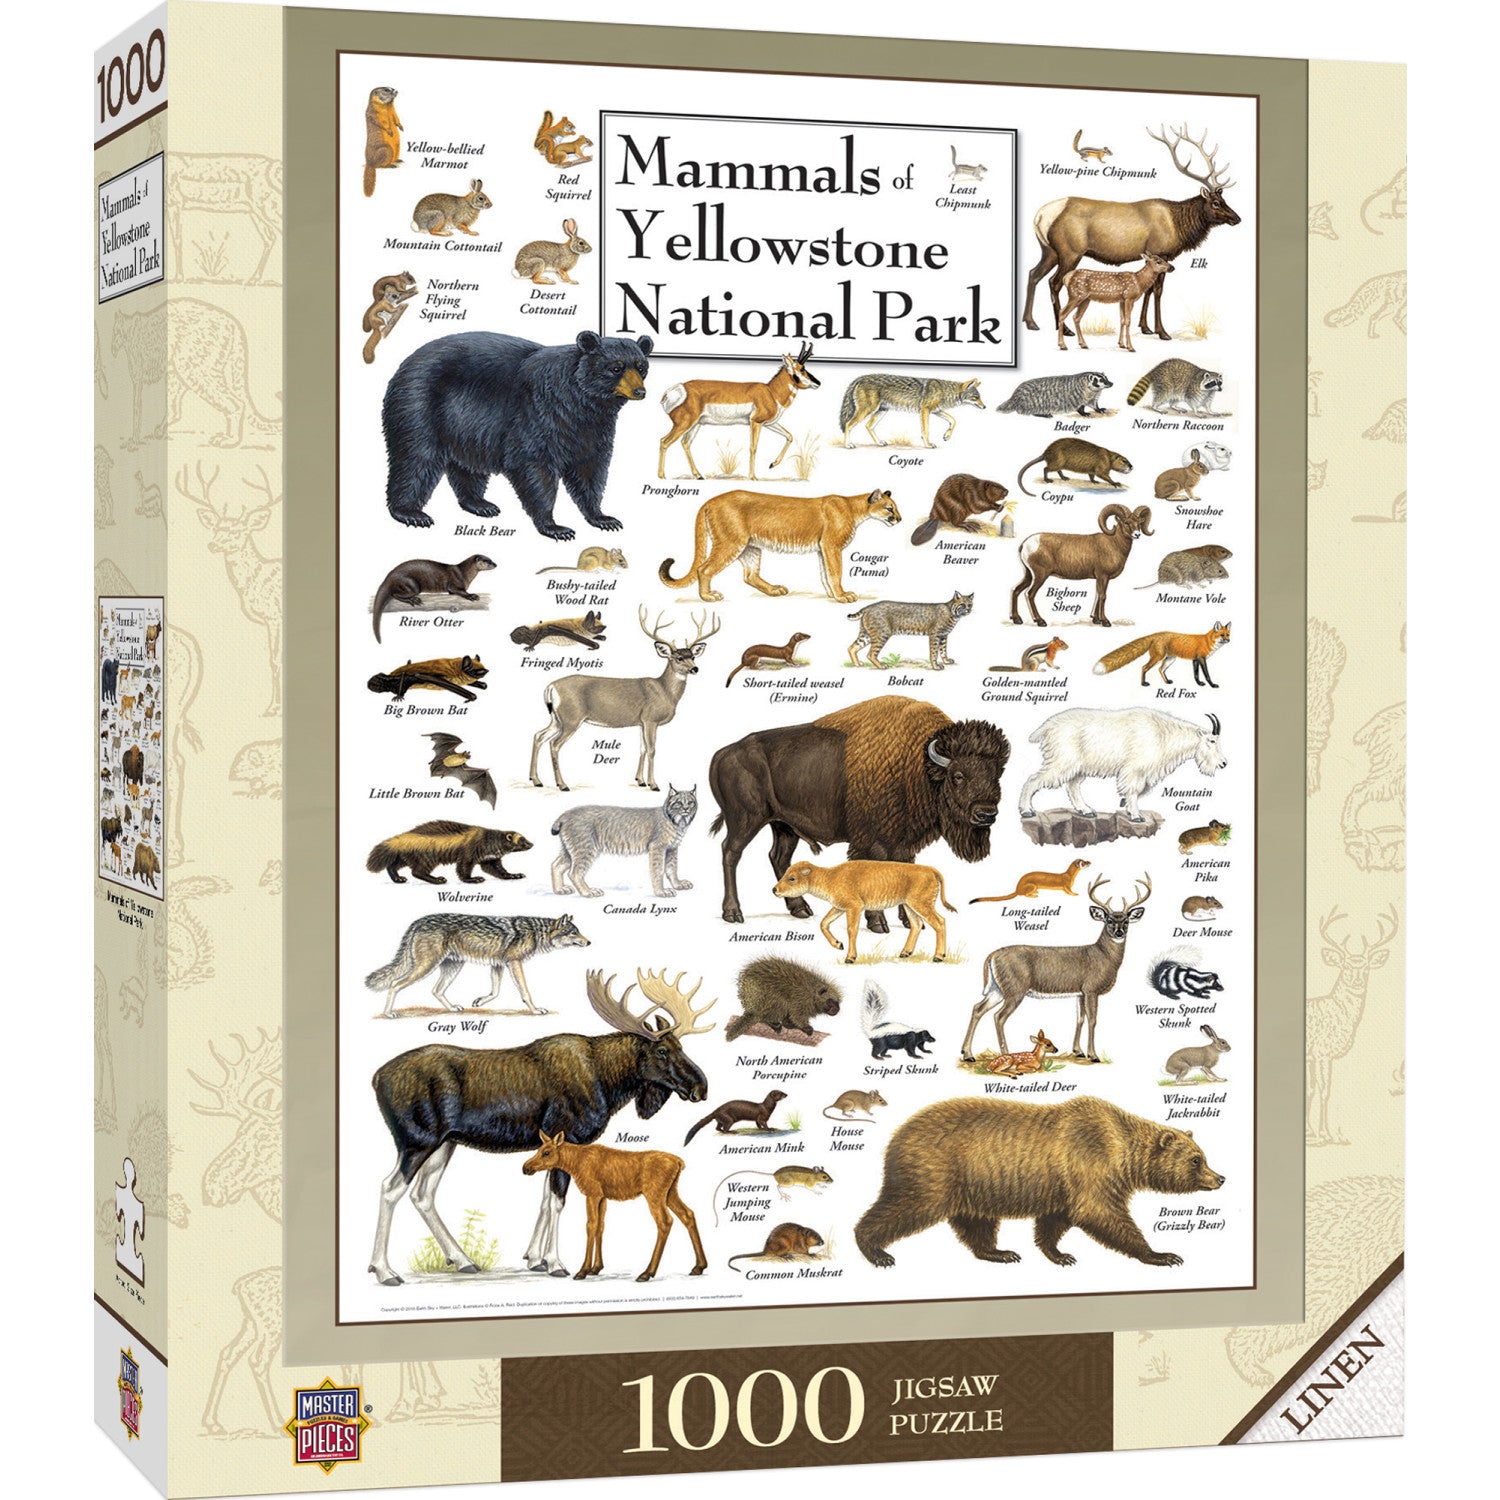 Mammals of Yellowstone National Park 1000 Piece Jigsaw Puzzle